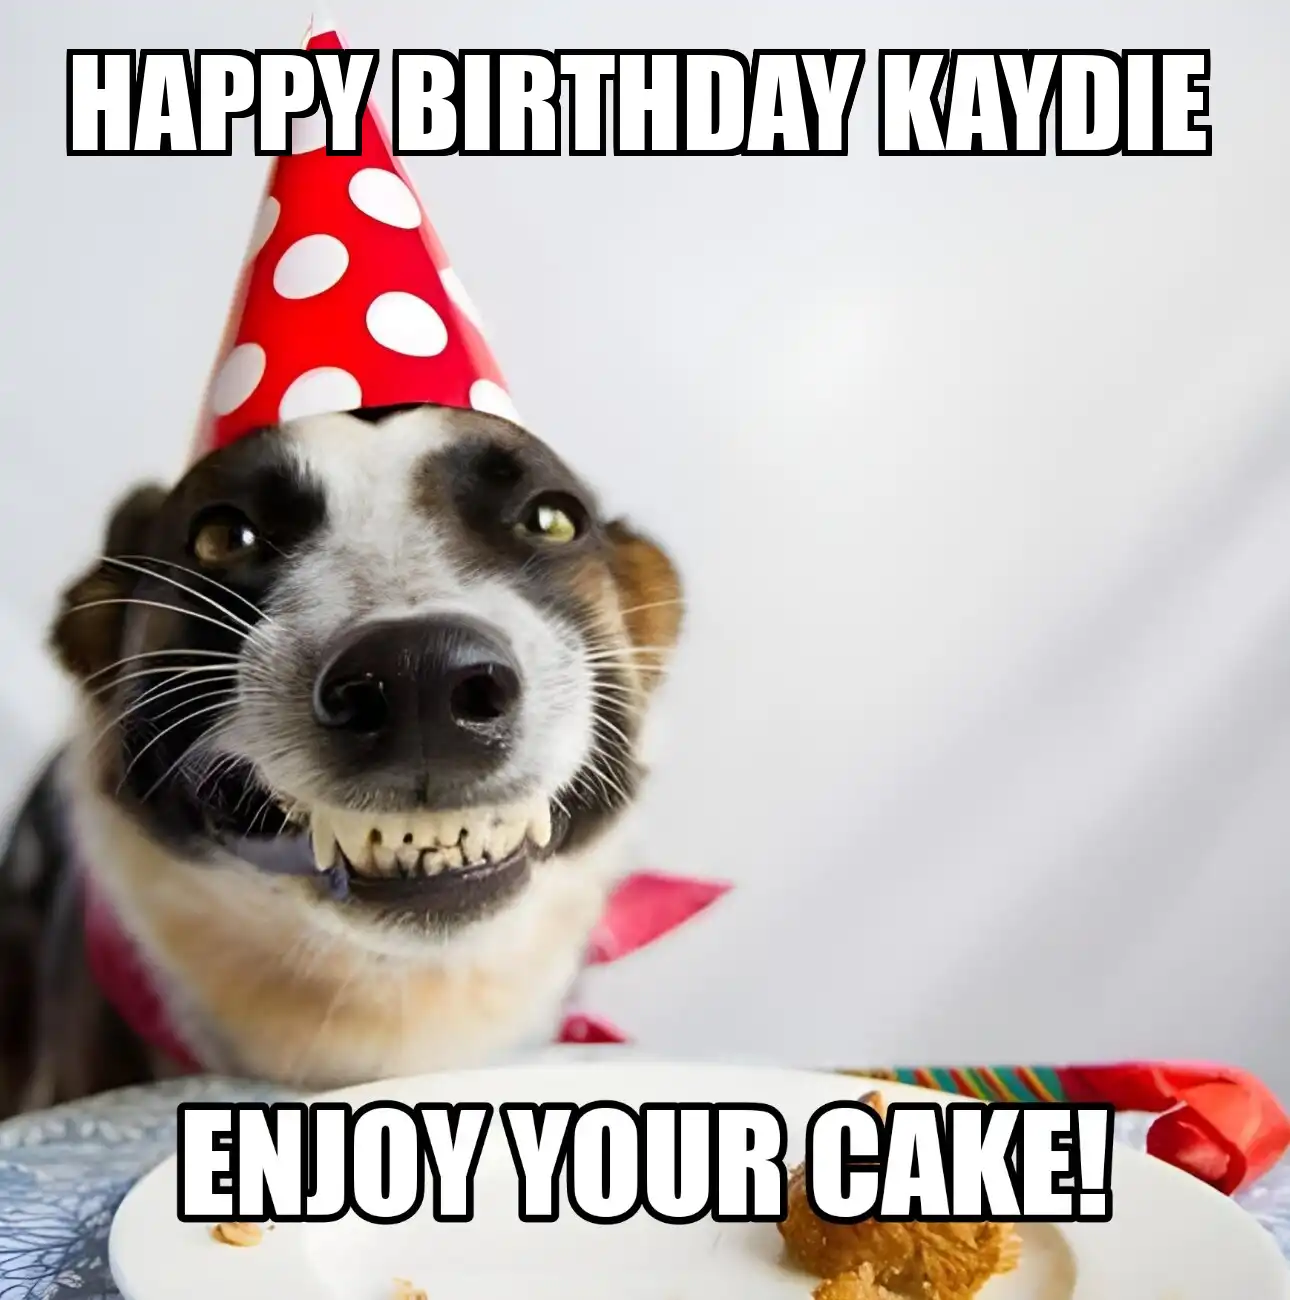 Happy Birthday Kaydie Enjoy Your Cake Dog Meme